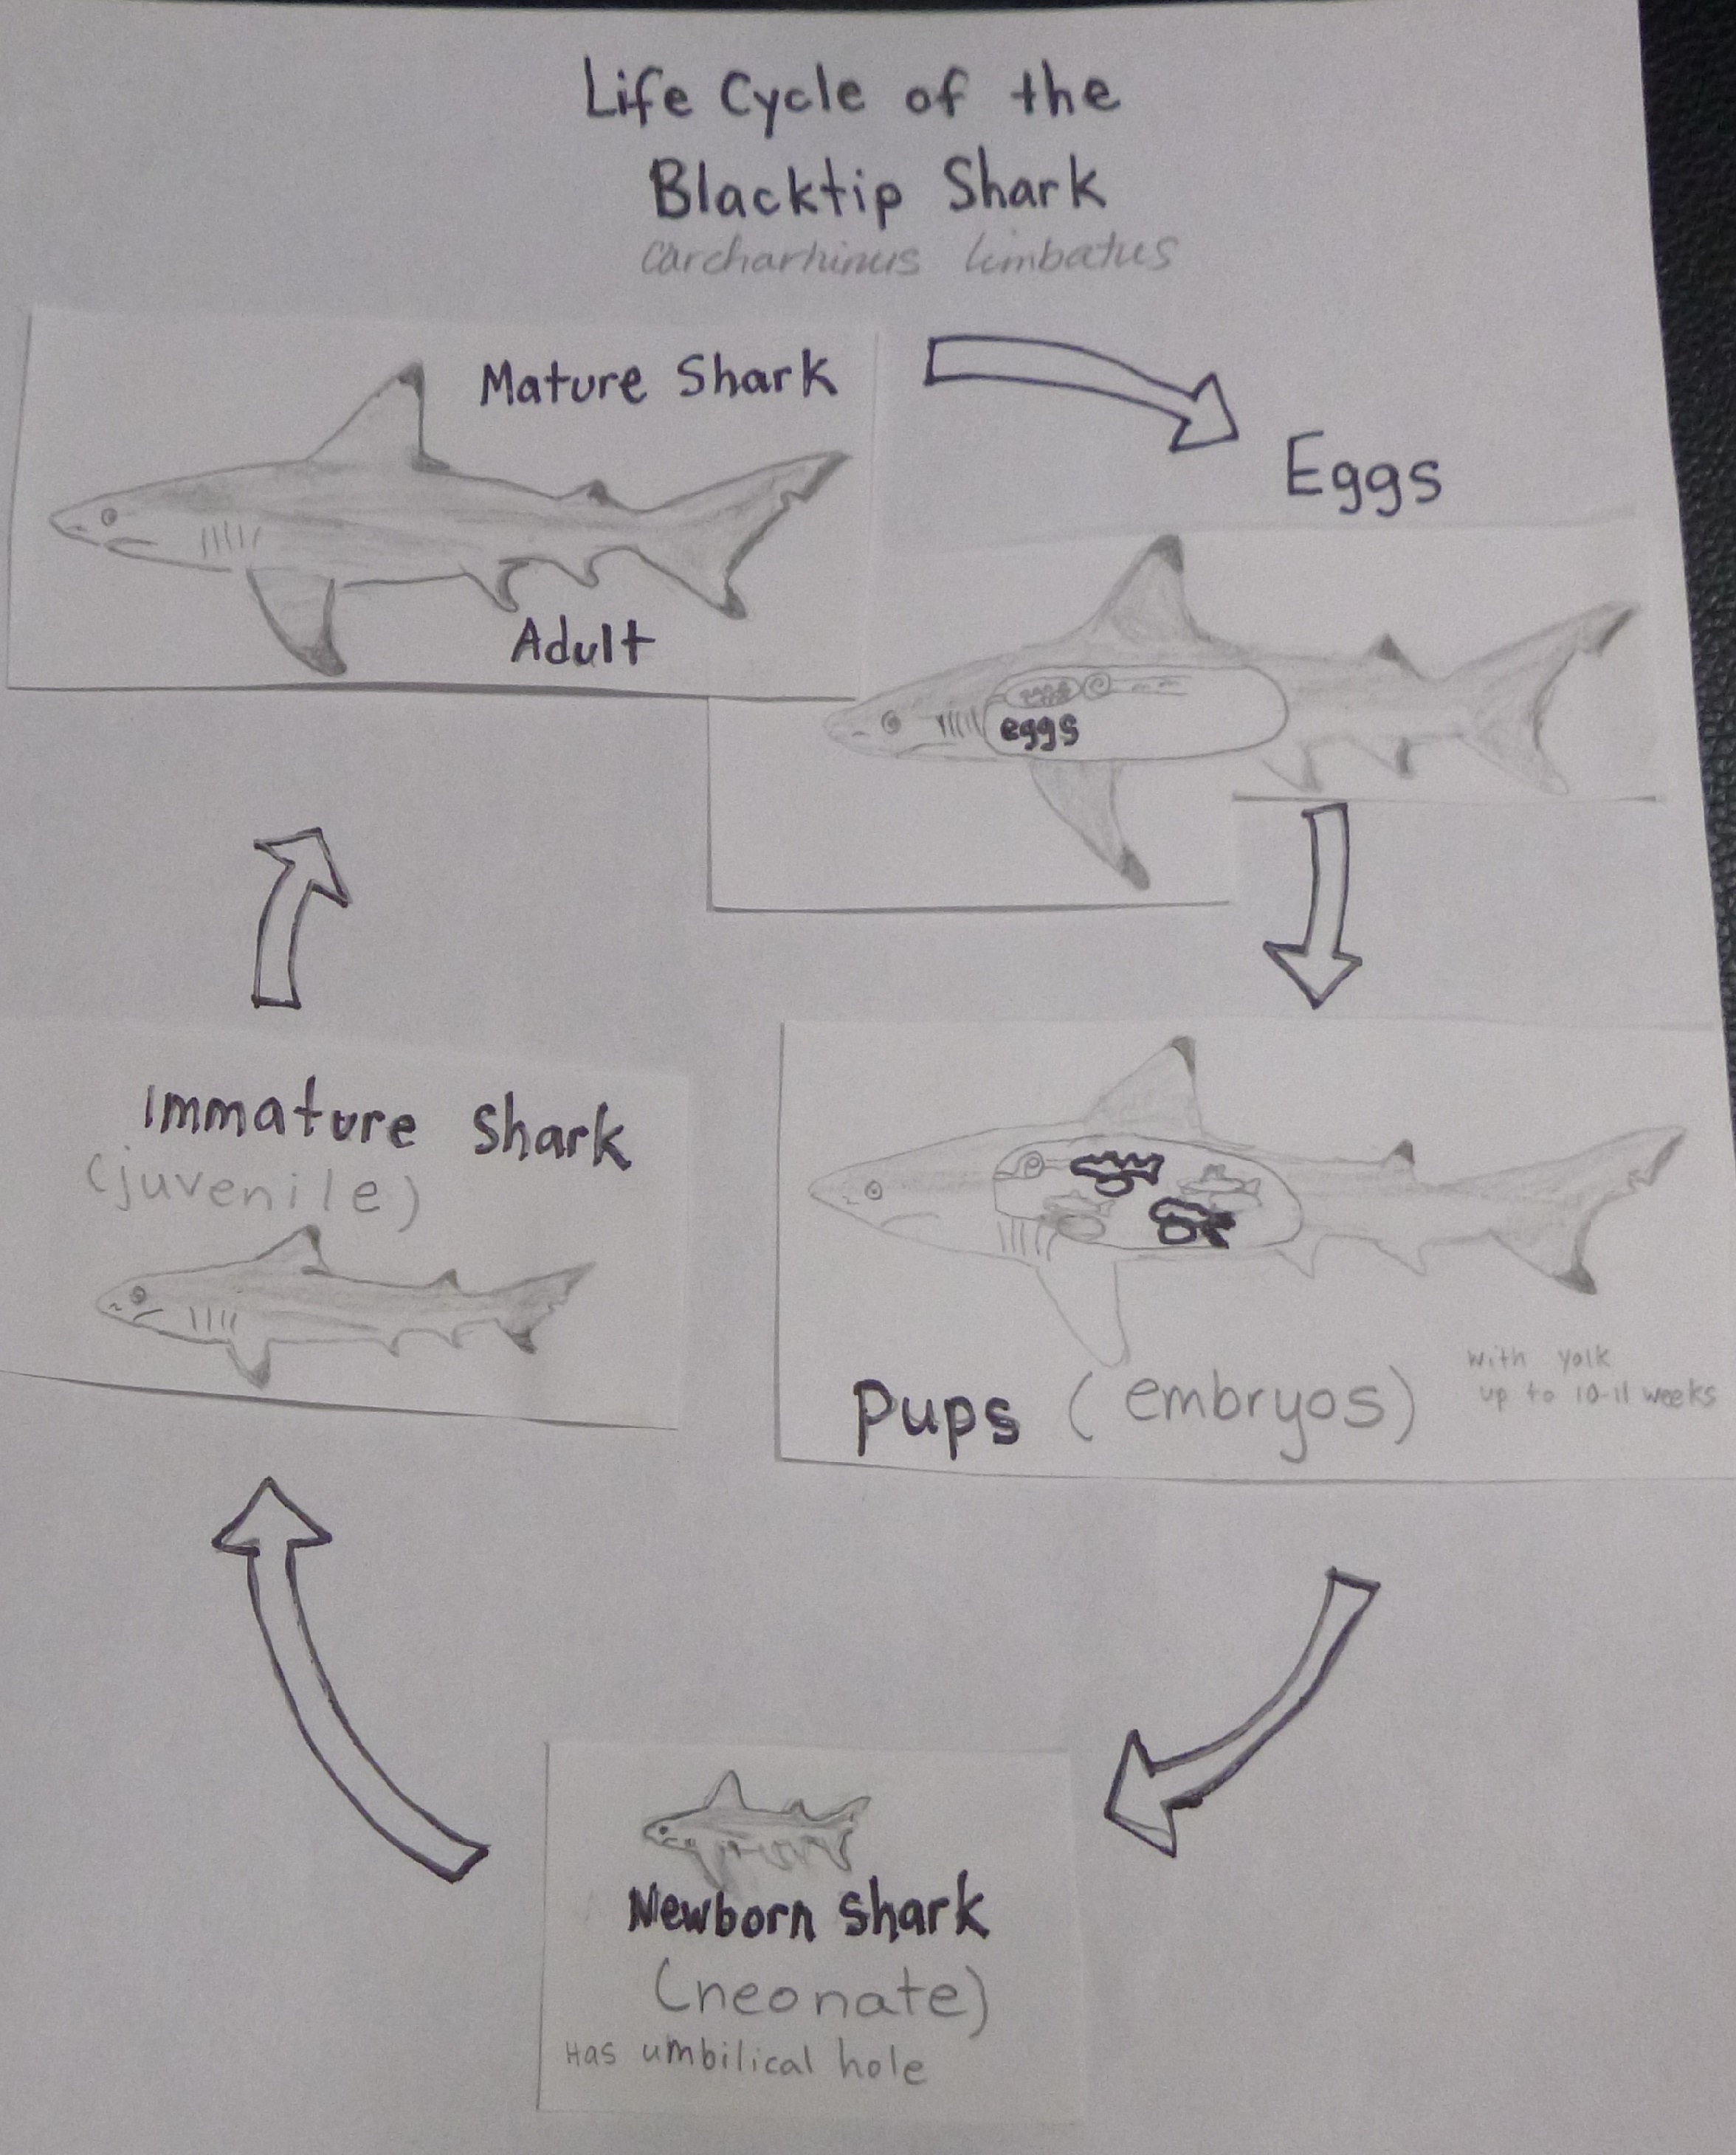 Hammerhead Shark Life Cycle Diagram